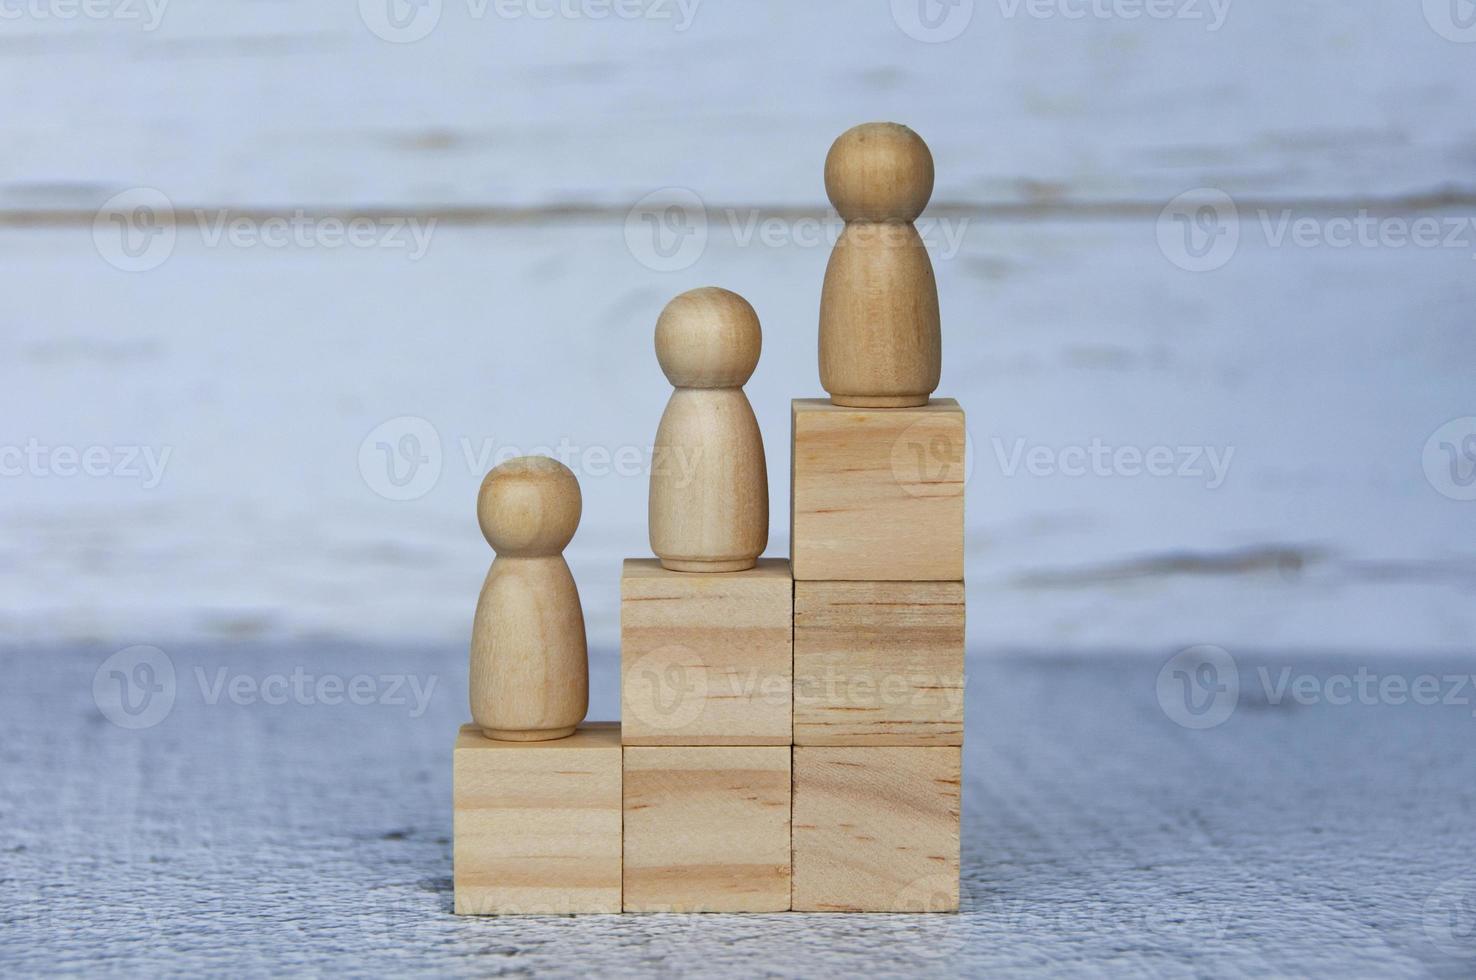 houten mensenfiguren bovenop houten blokken. carrière groei concept foto